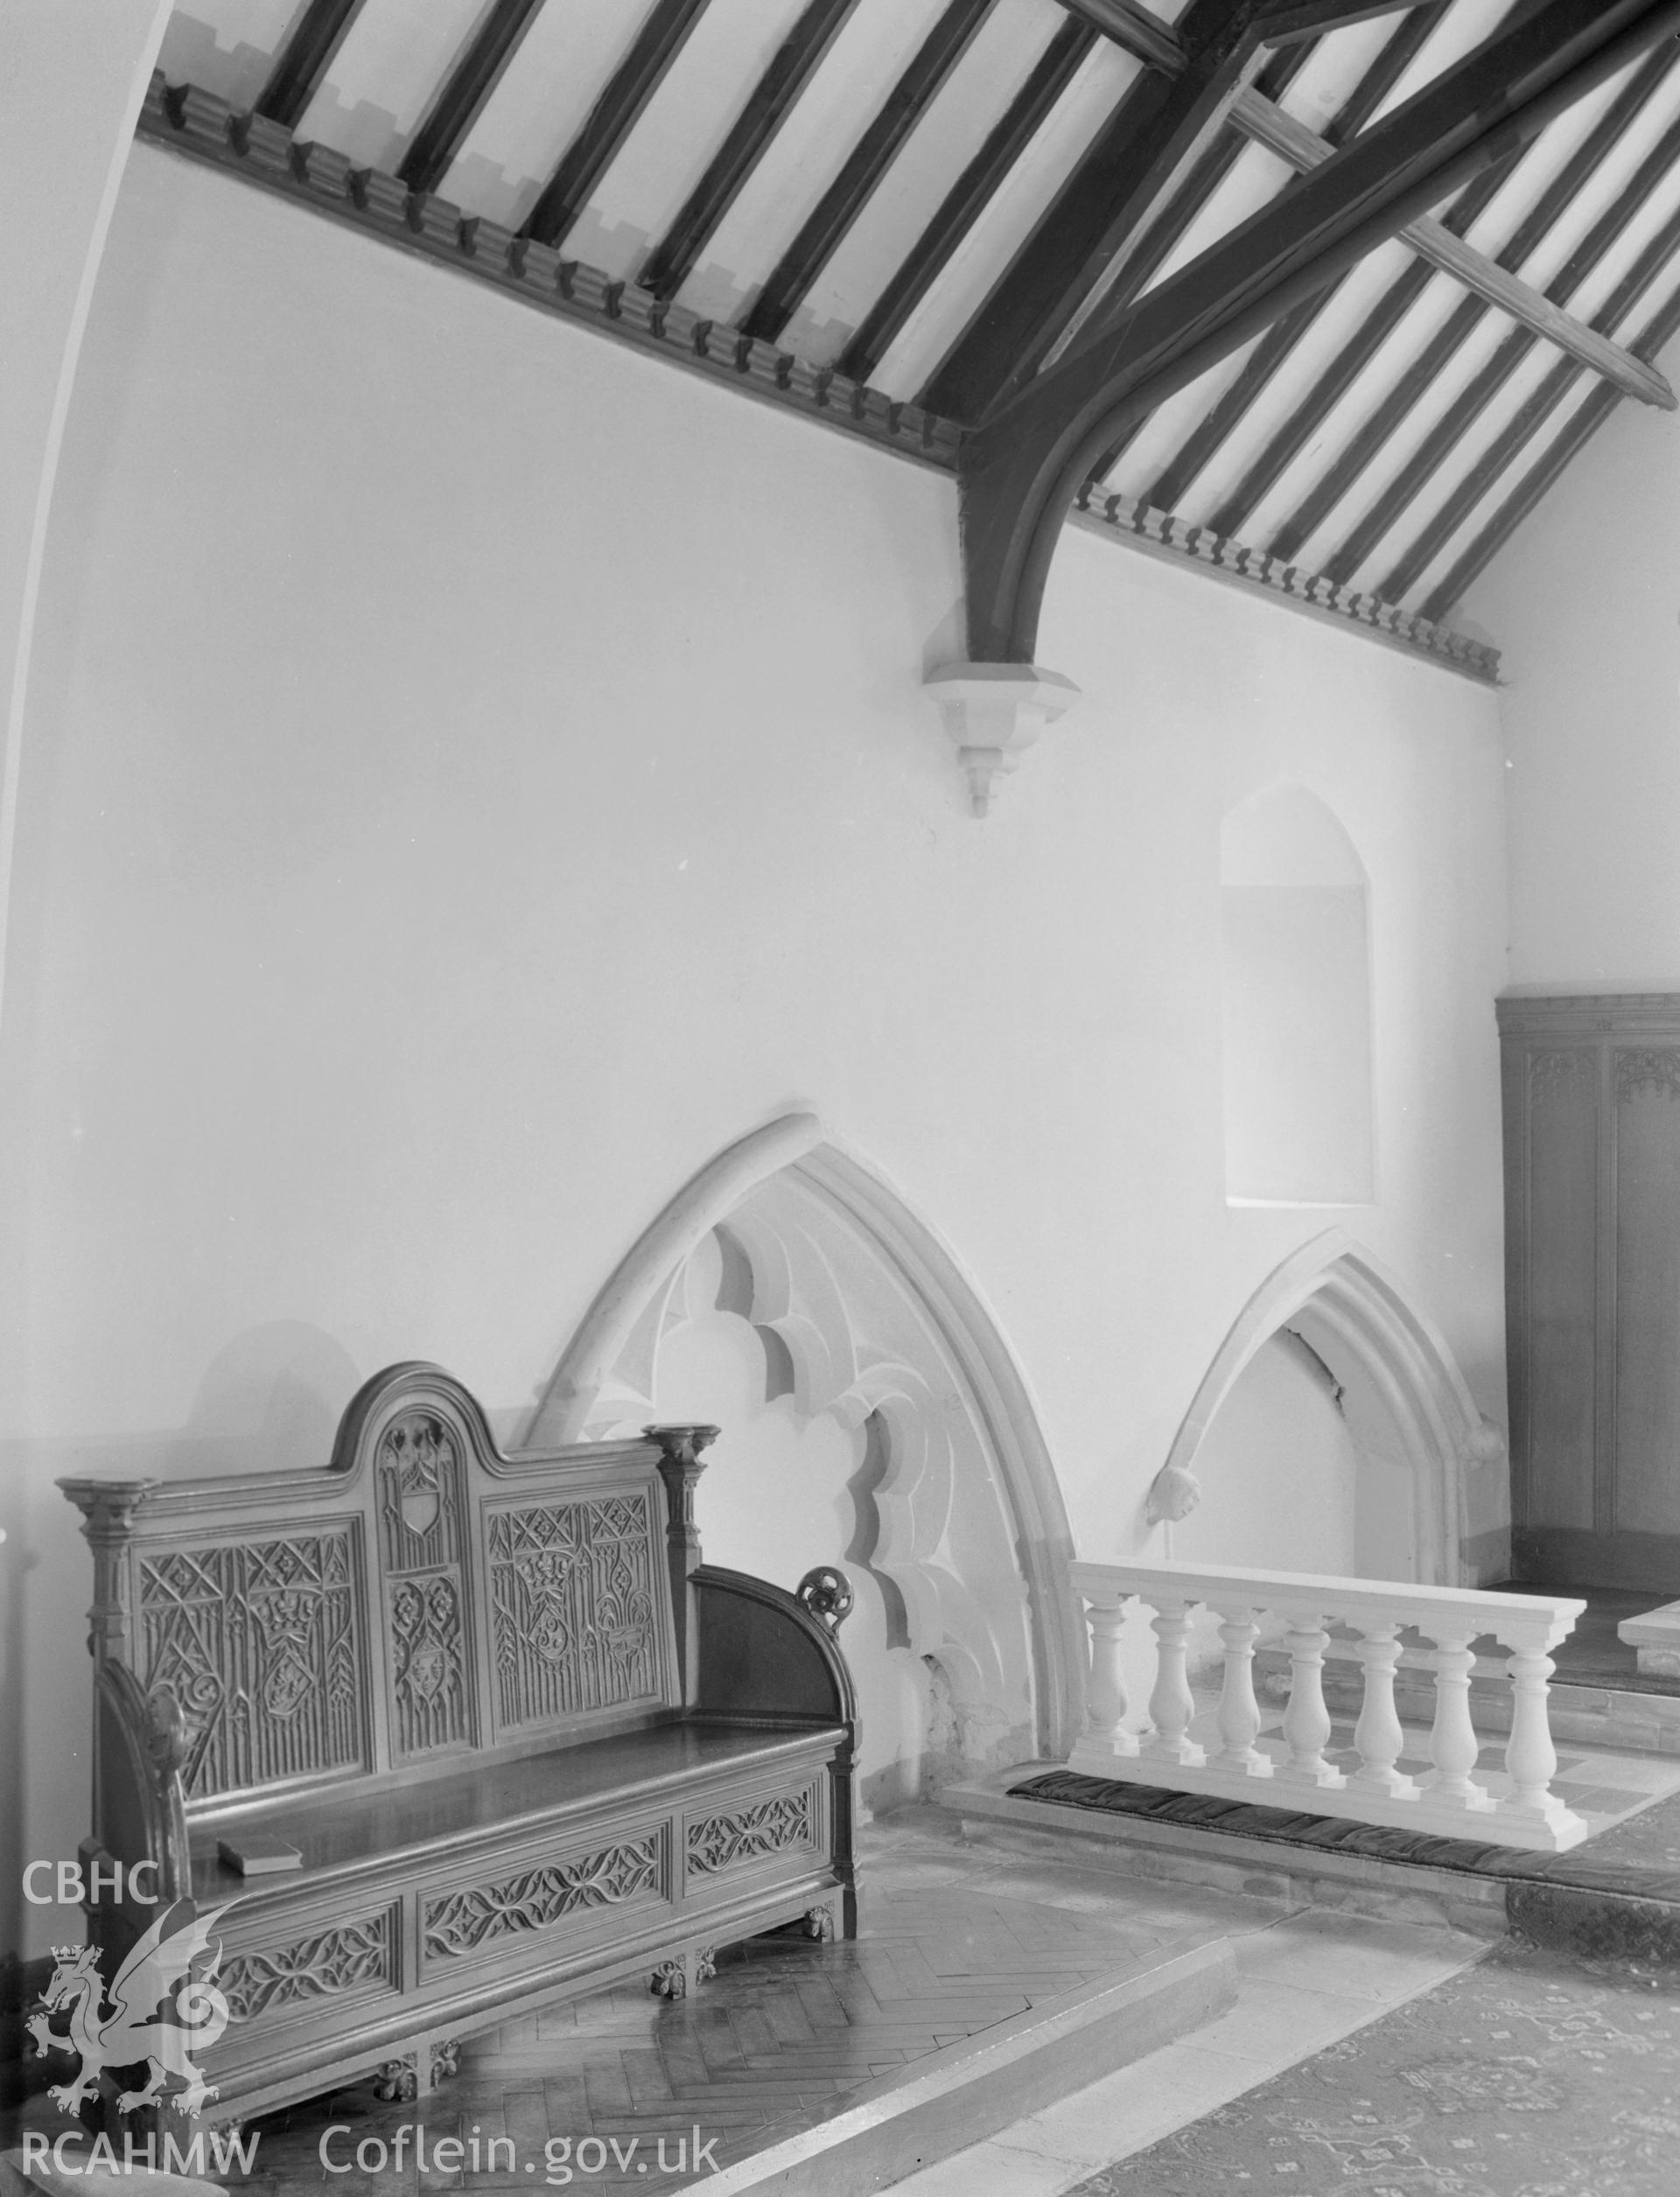 Interior view of St George's Church,  taken 25.06.65.